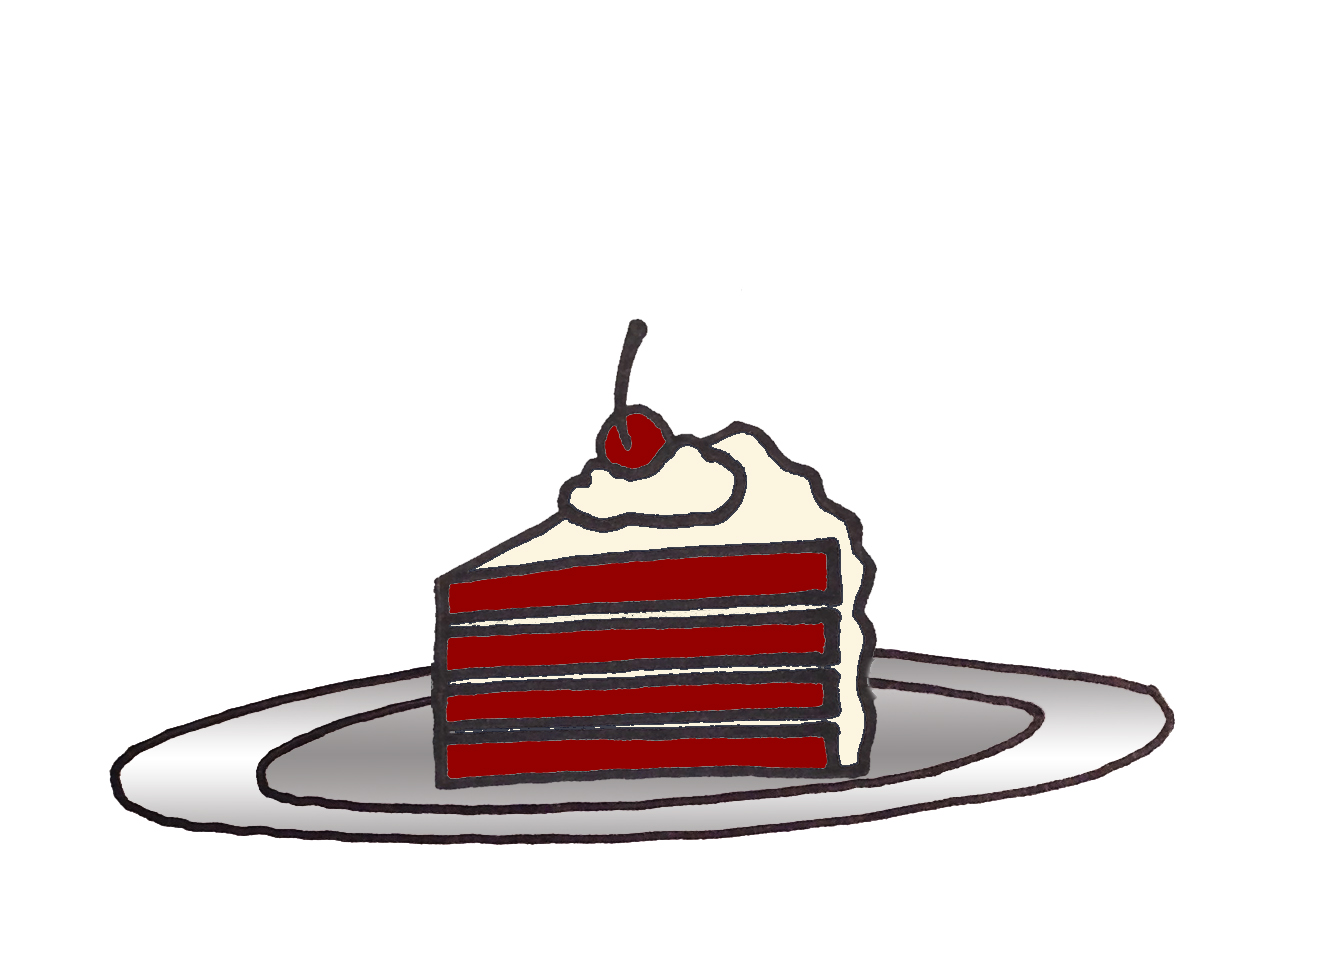 An illustration of a slice of red velvet cake on a plate